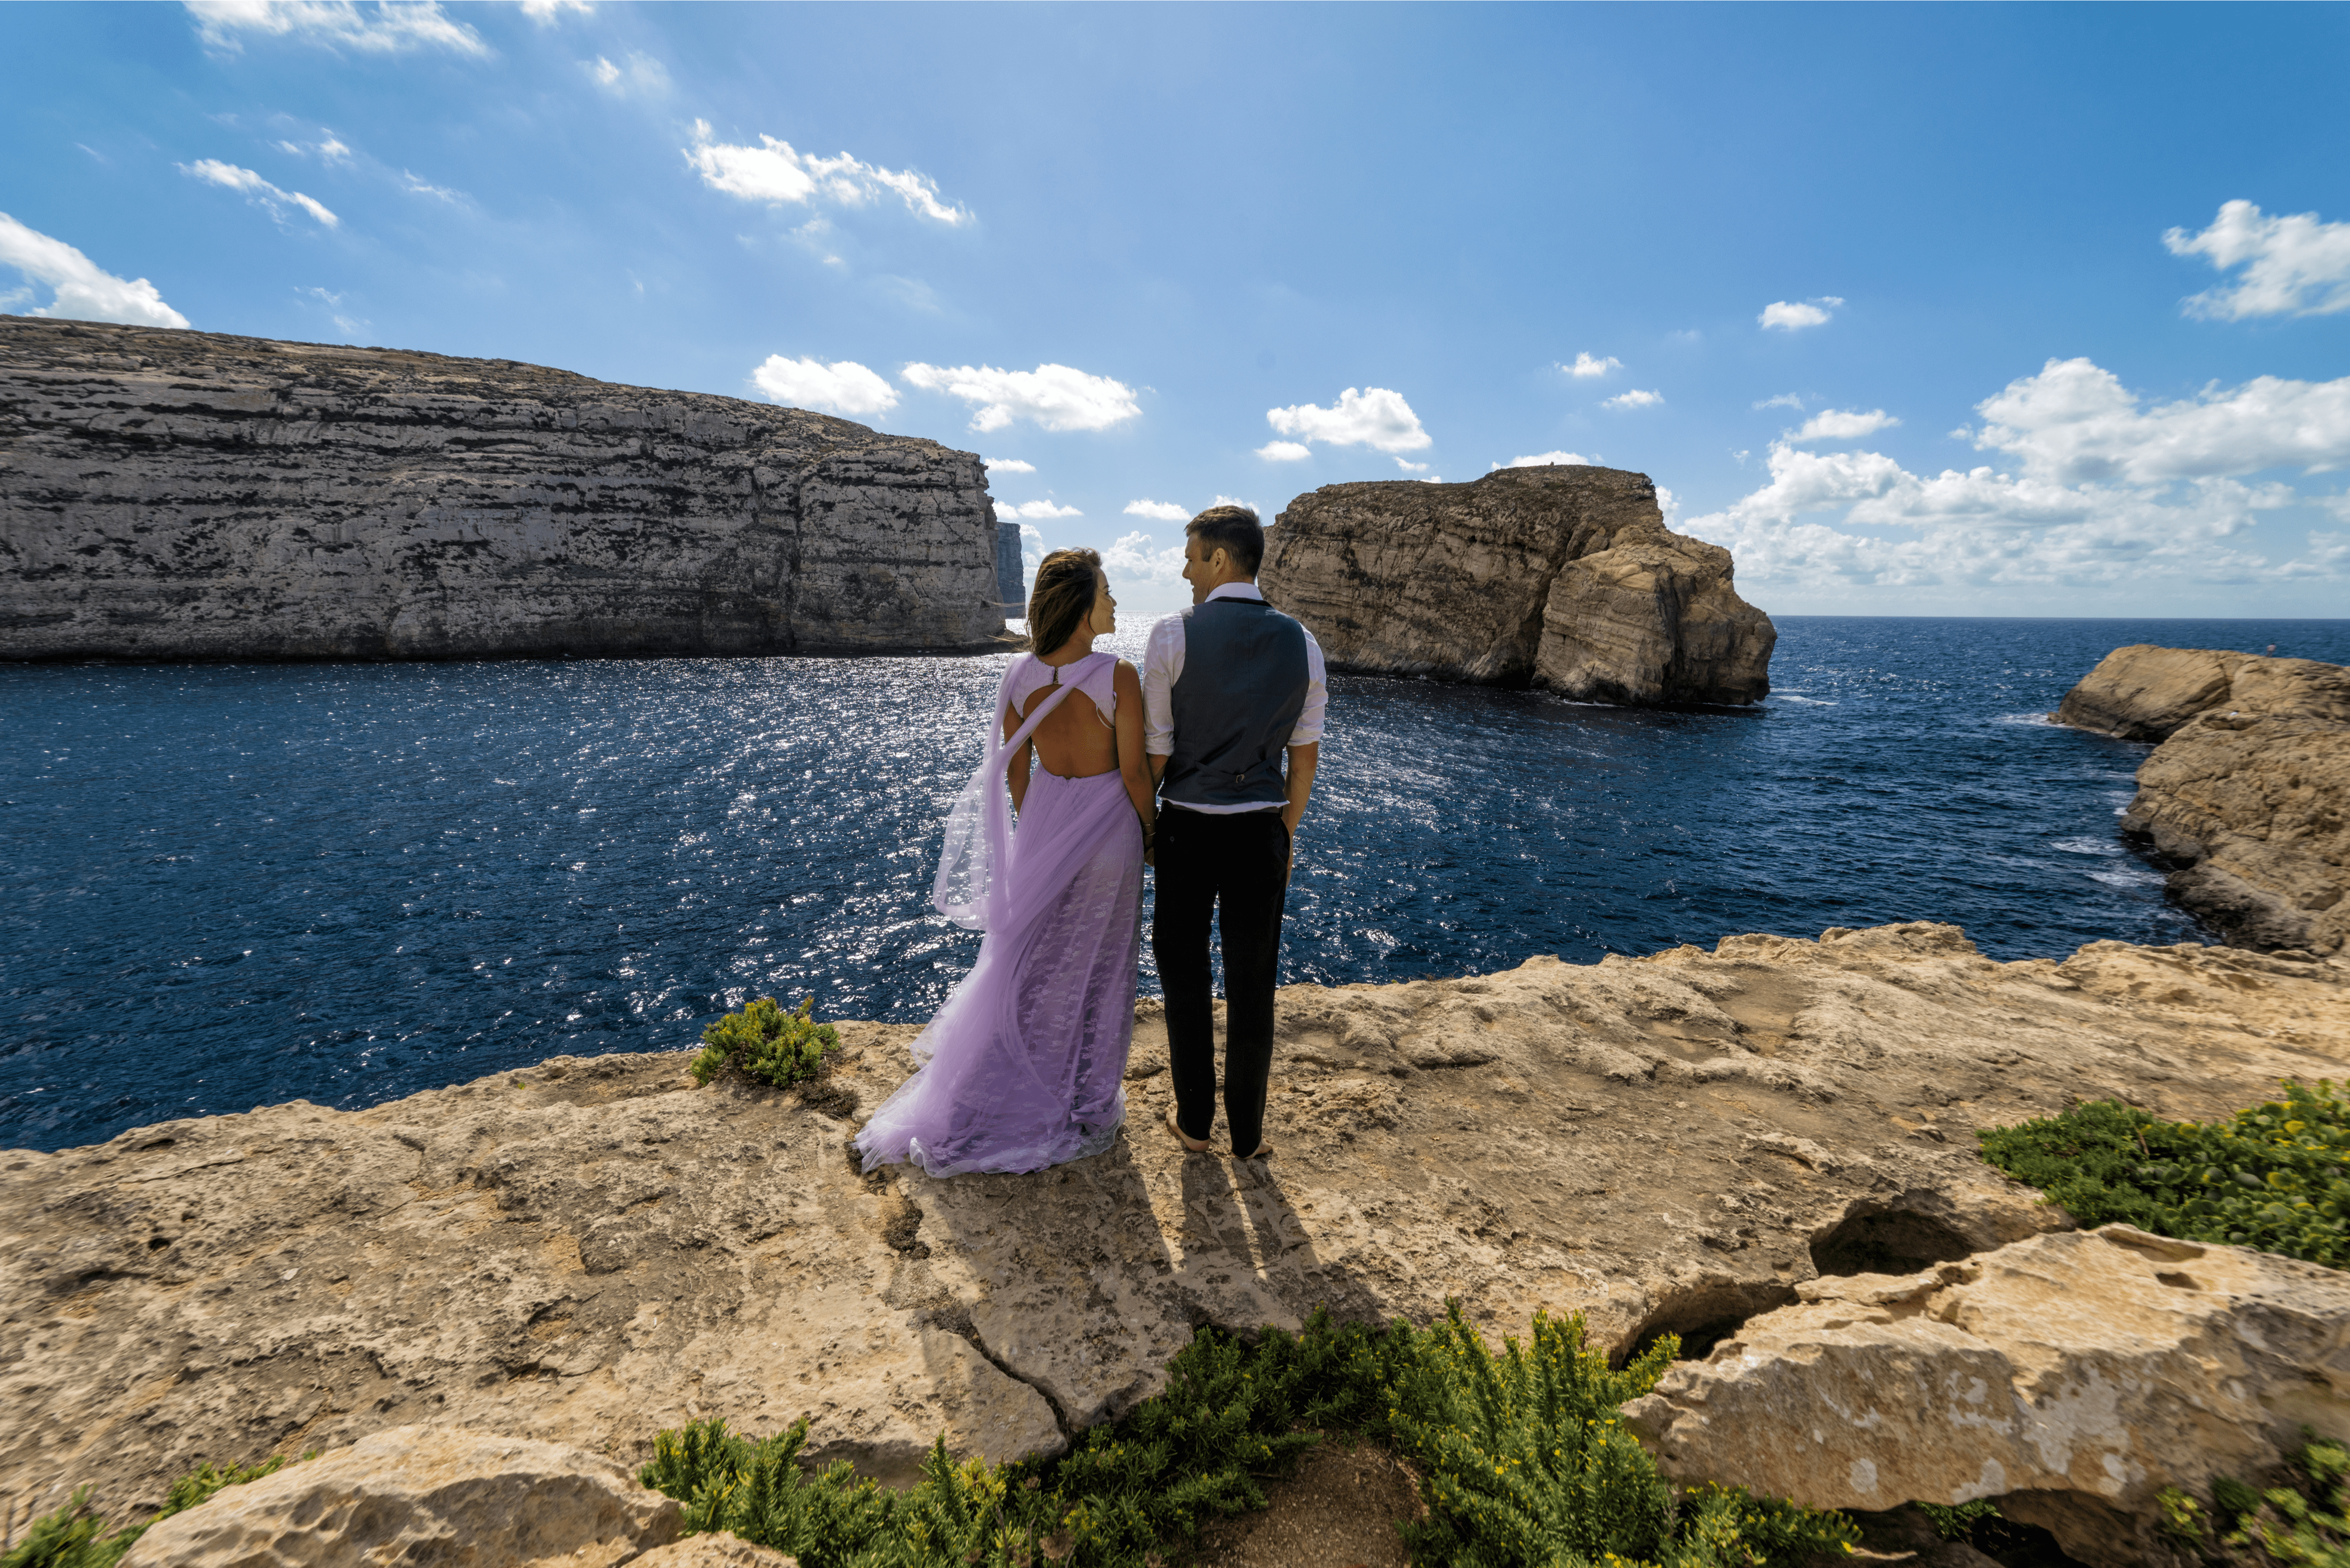 malta tourism 2023